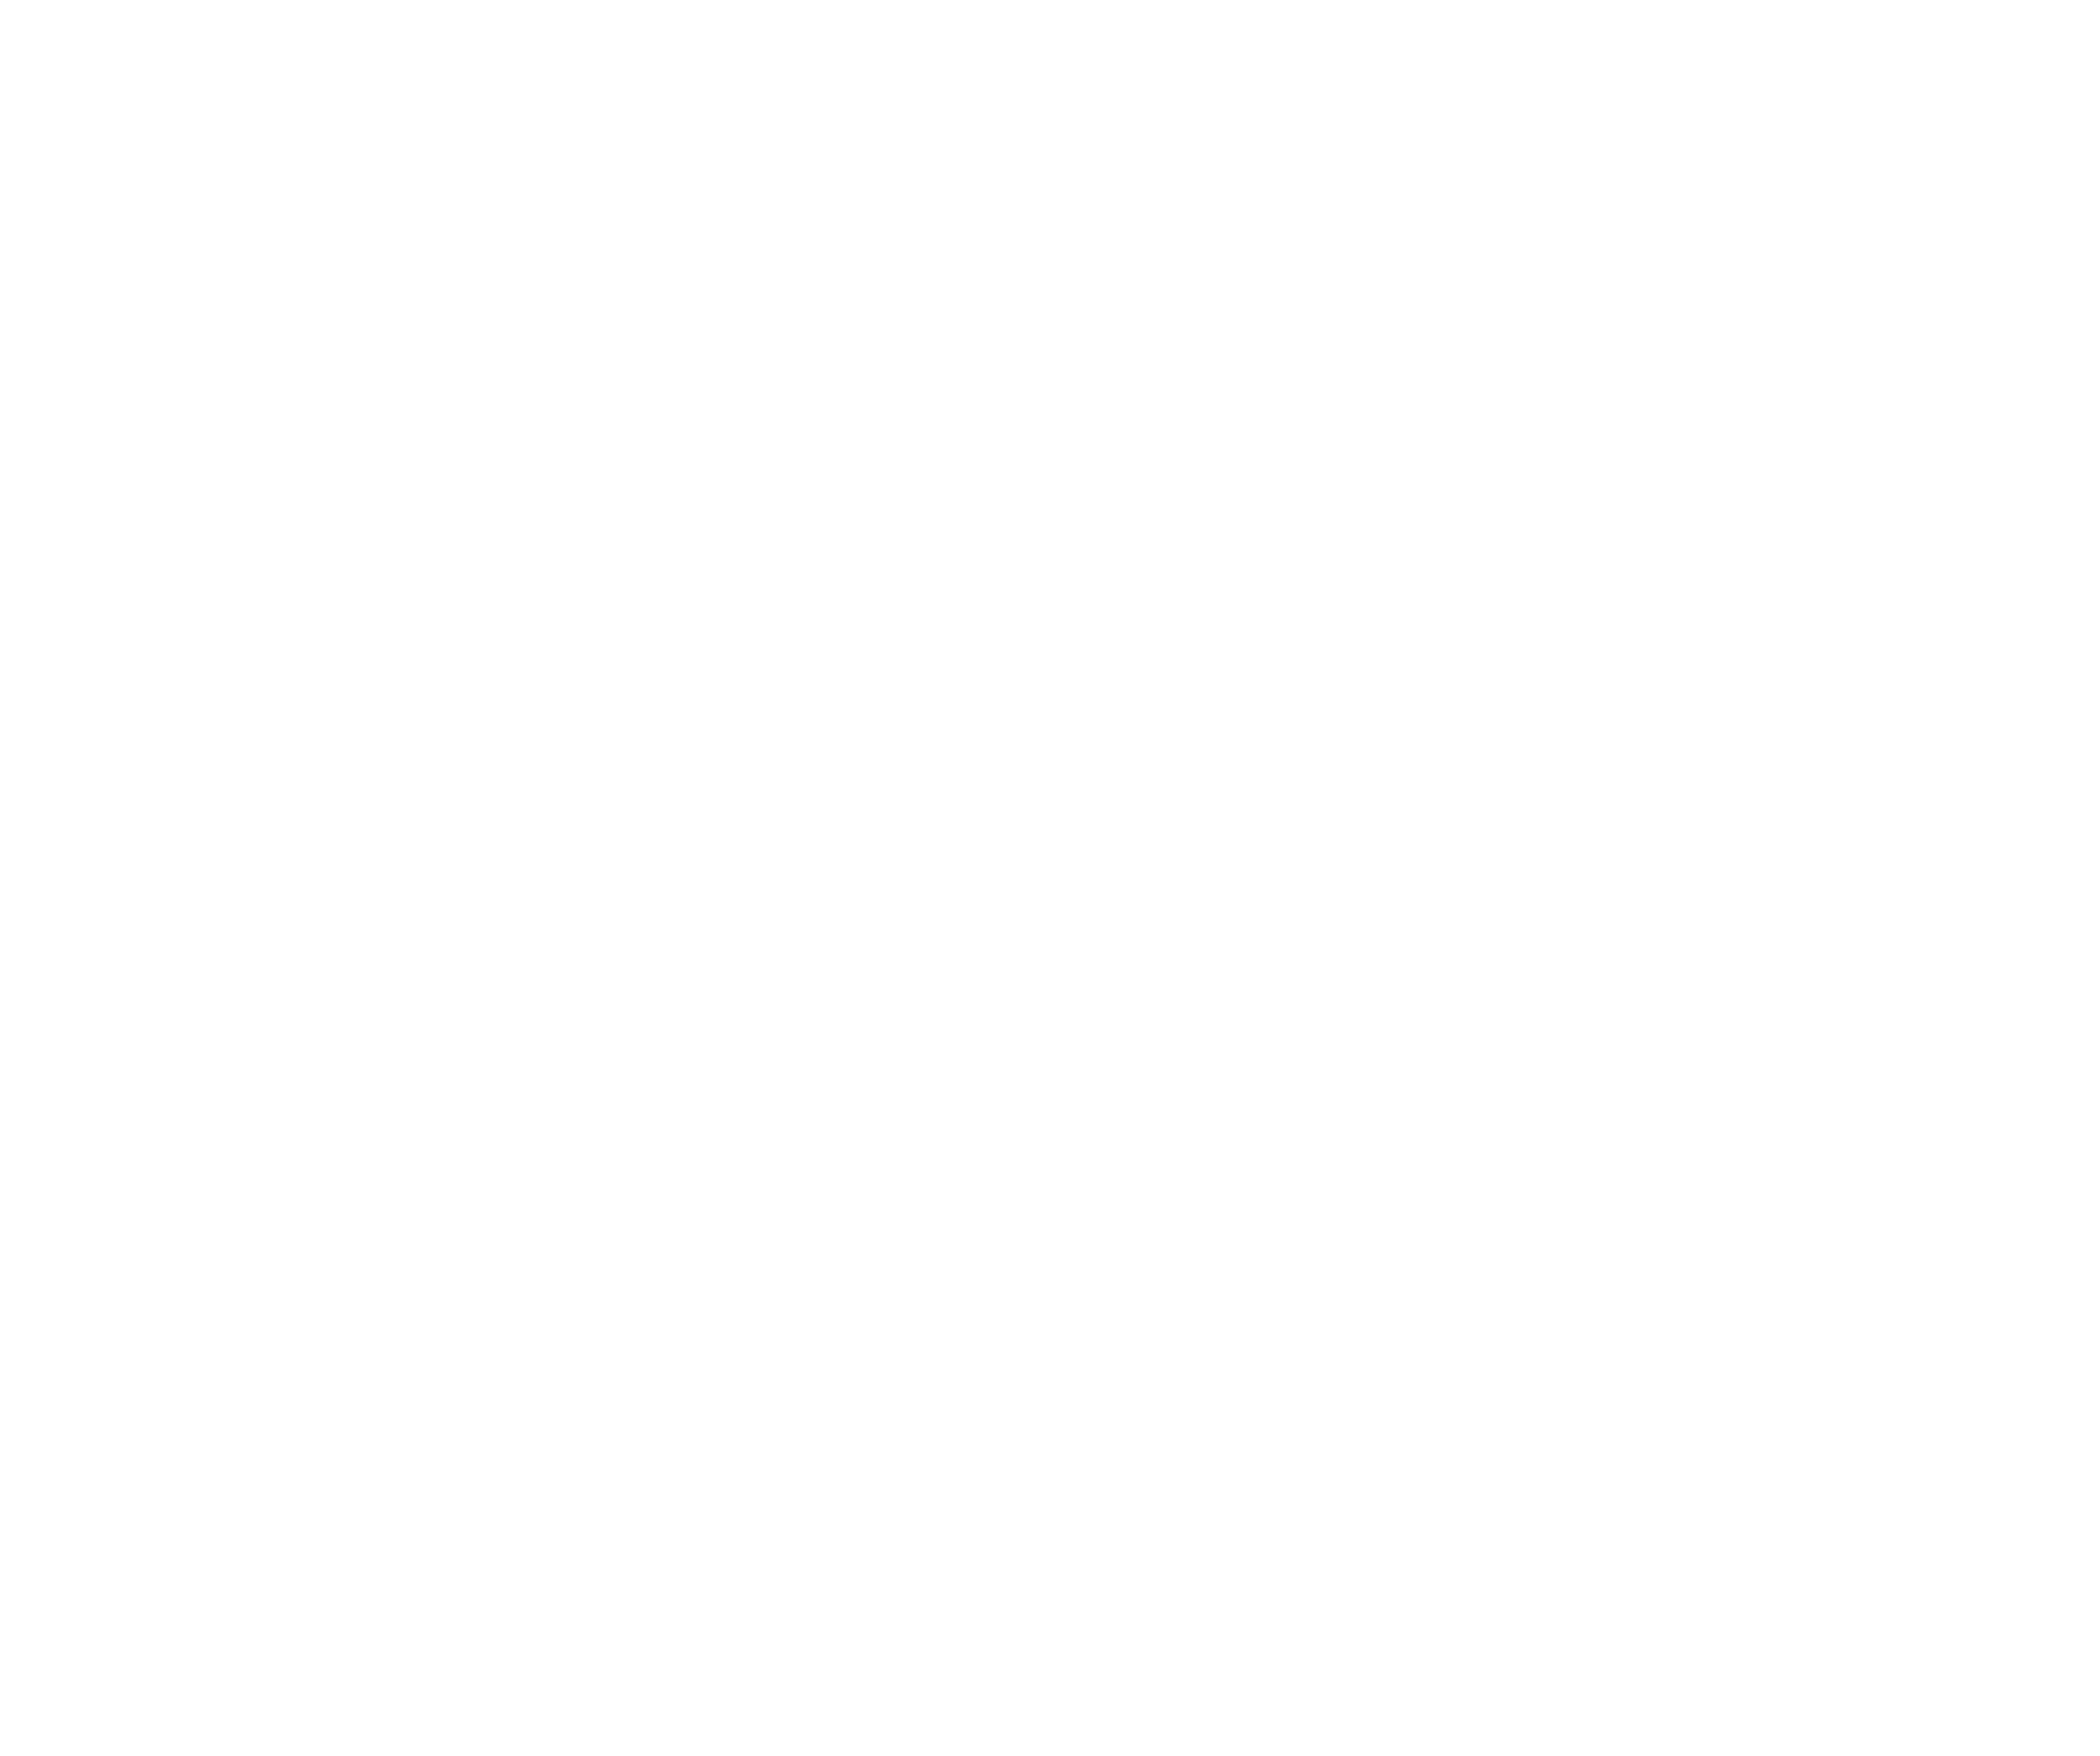 Edwin Raphael